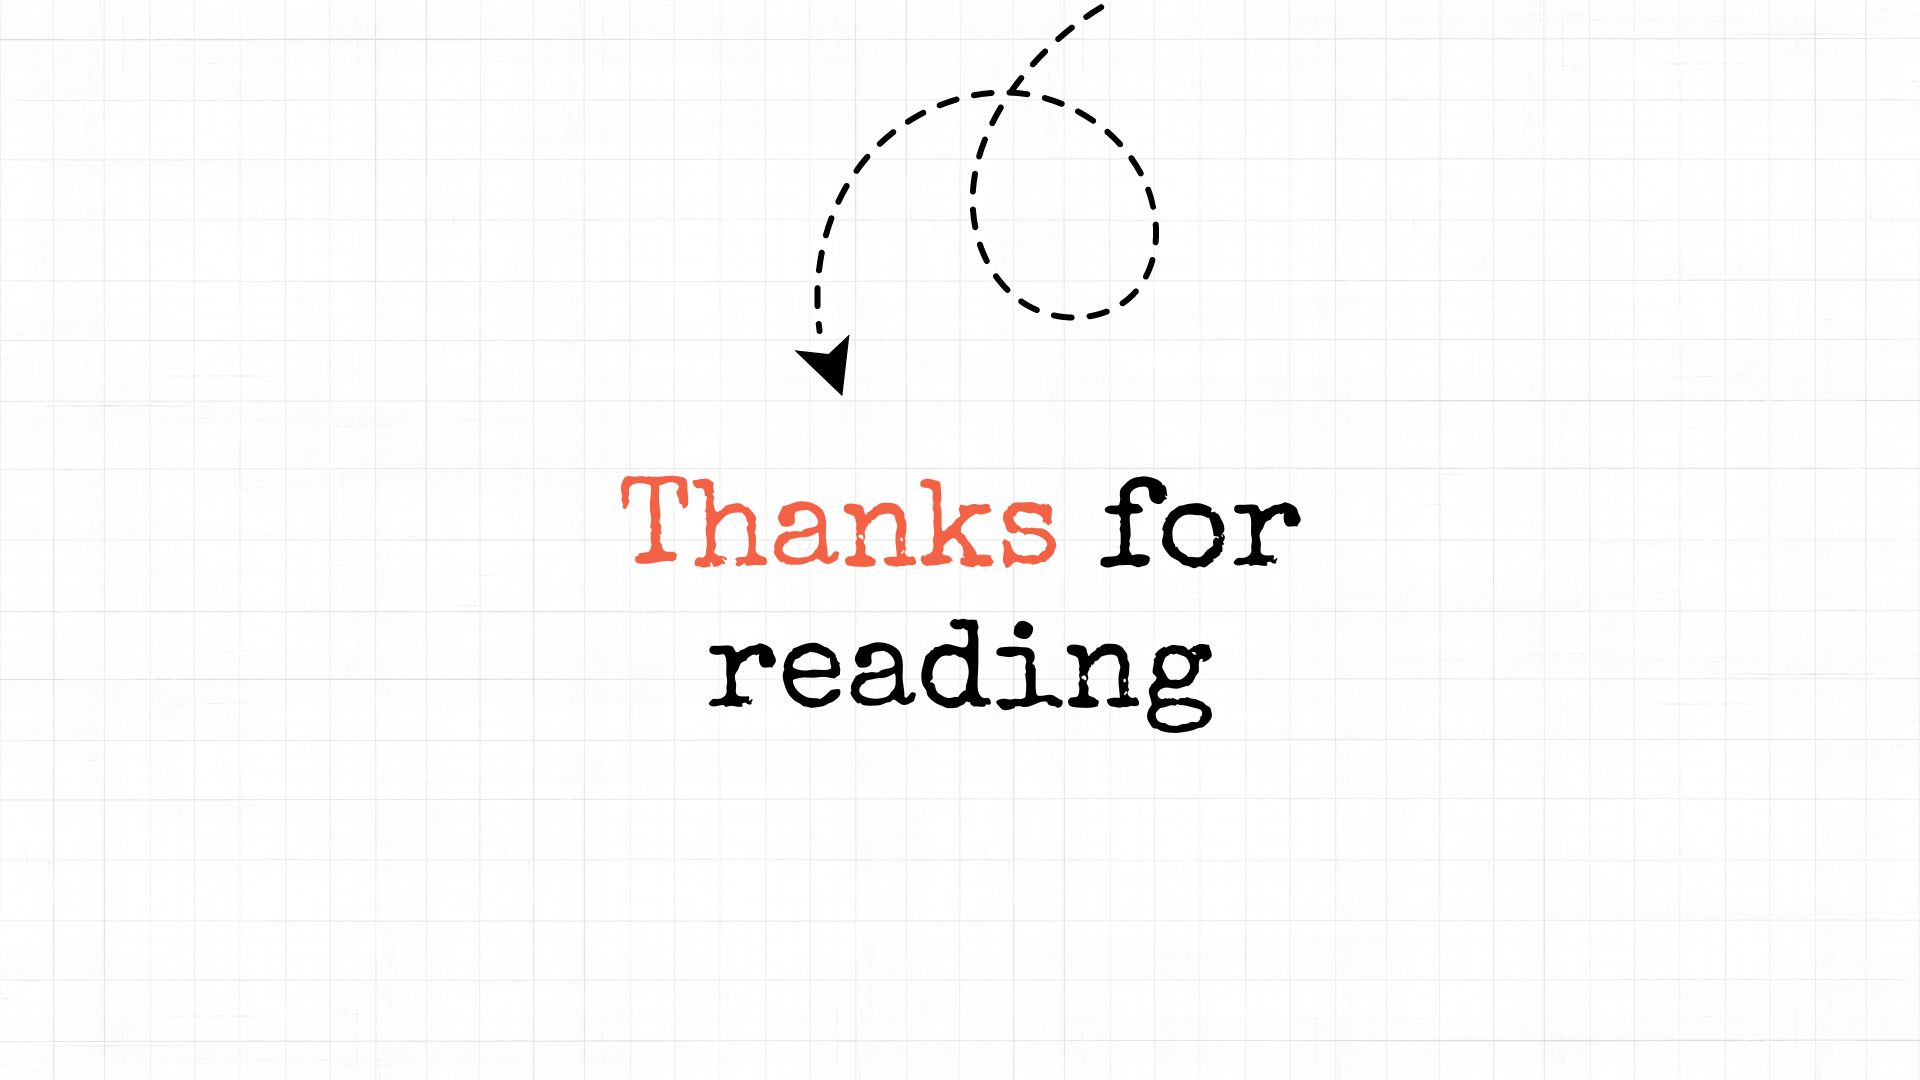 Thanks for reading!